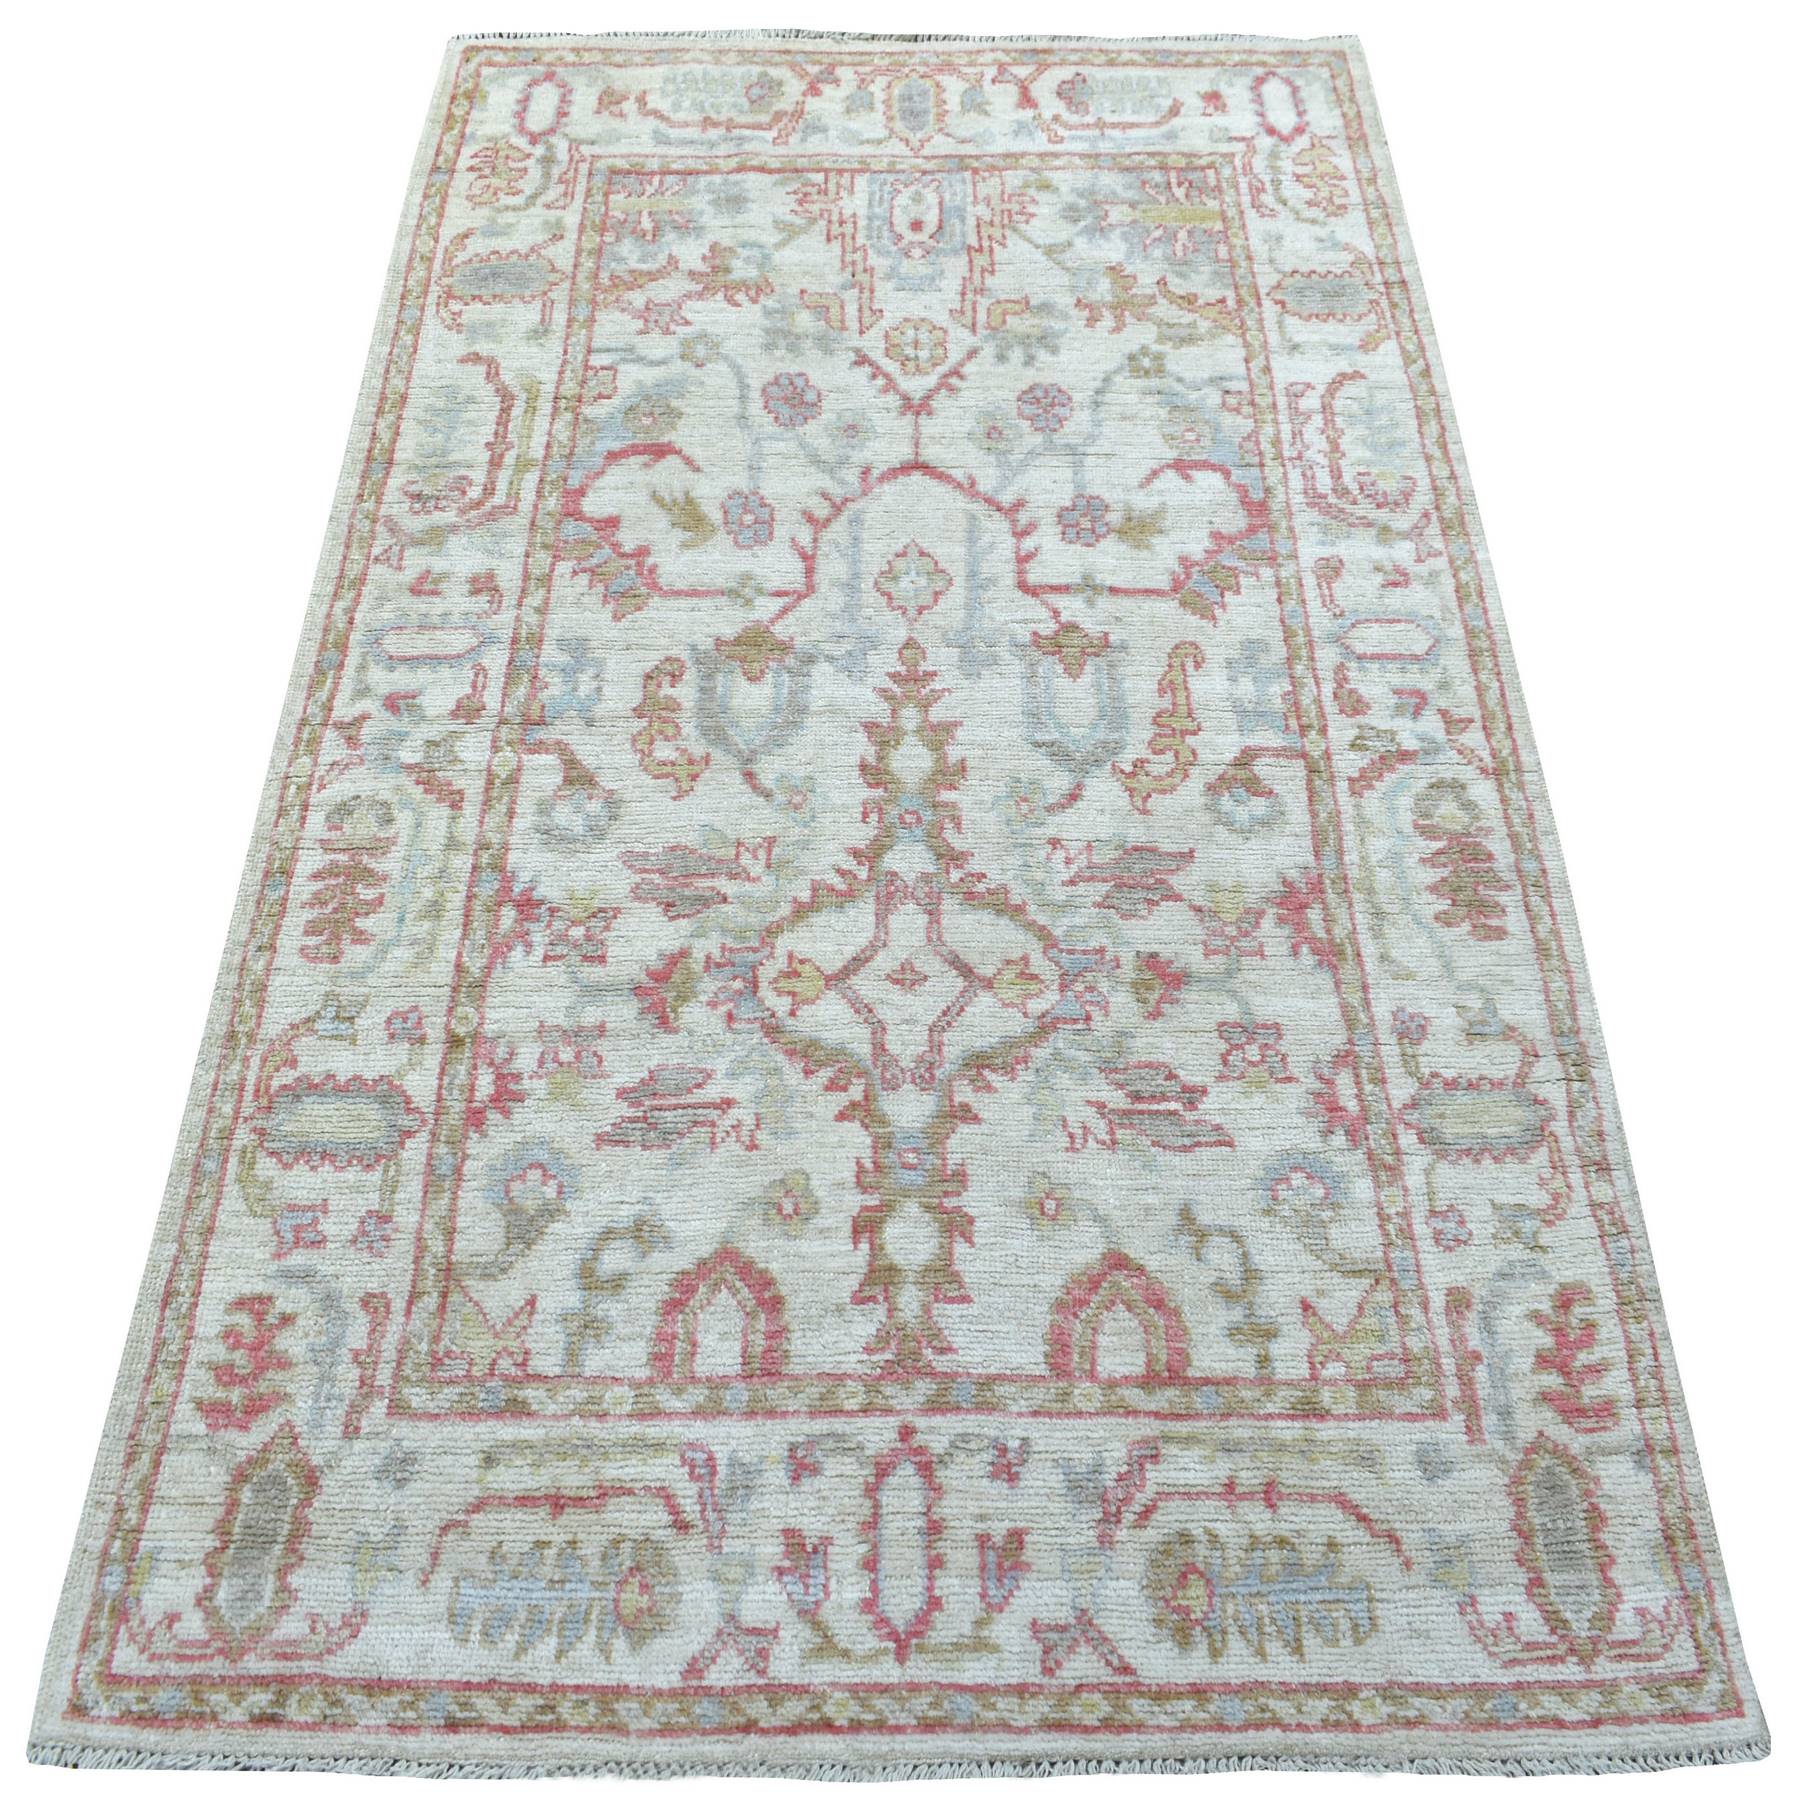 4.8x7.10 Ft rug Turkish rug Woven rug Vintage rug Bedroom rug K-697 Entryway rug Area rug Oushak rug Handmade rug Geometric rug